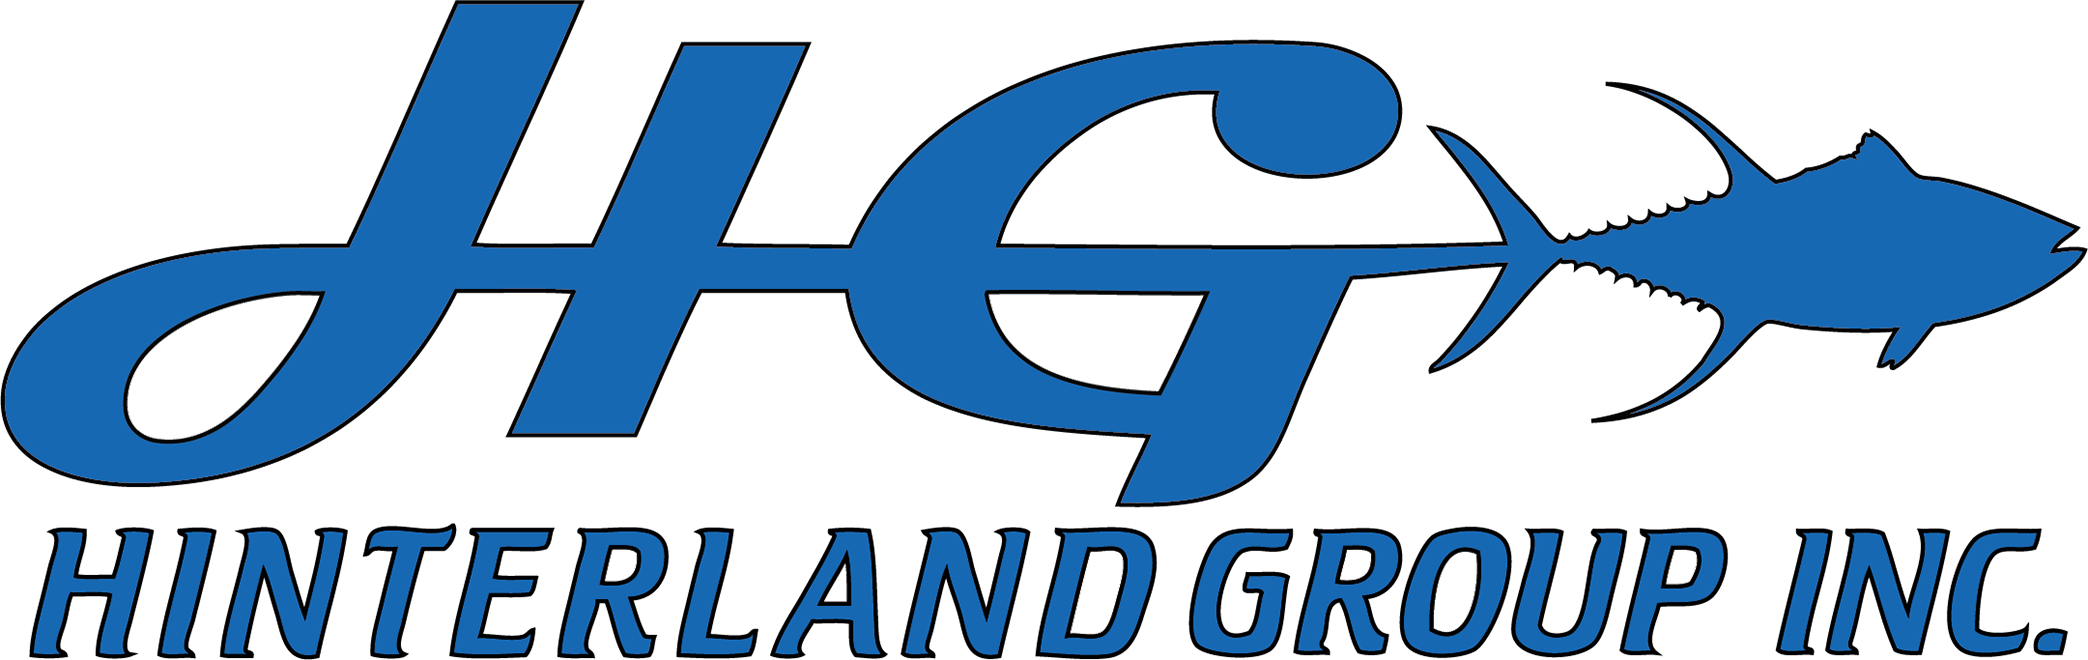 Hinterland Group Inc. Logo